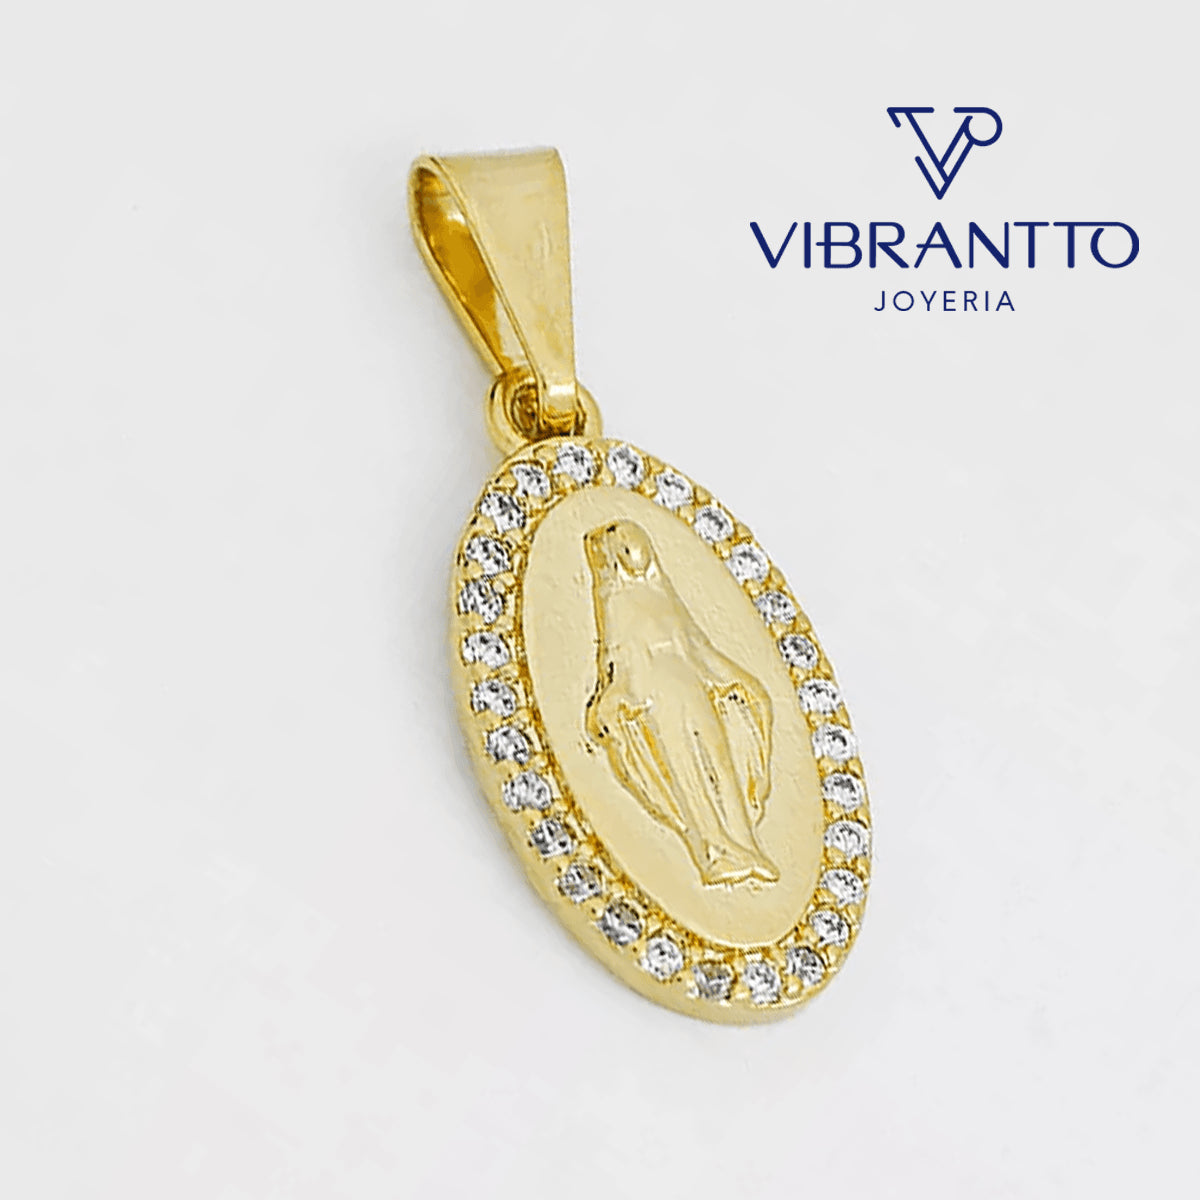 Medalla Virgen Milagrosa Circornias 1. Oro Laminado 18k - Vibrantto.com - Colombia